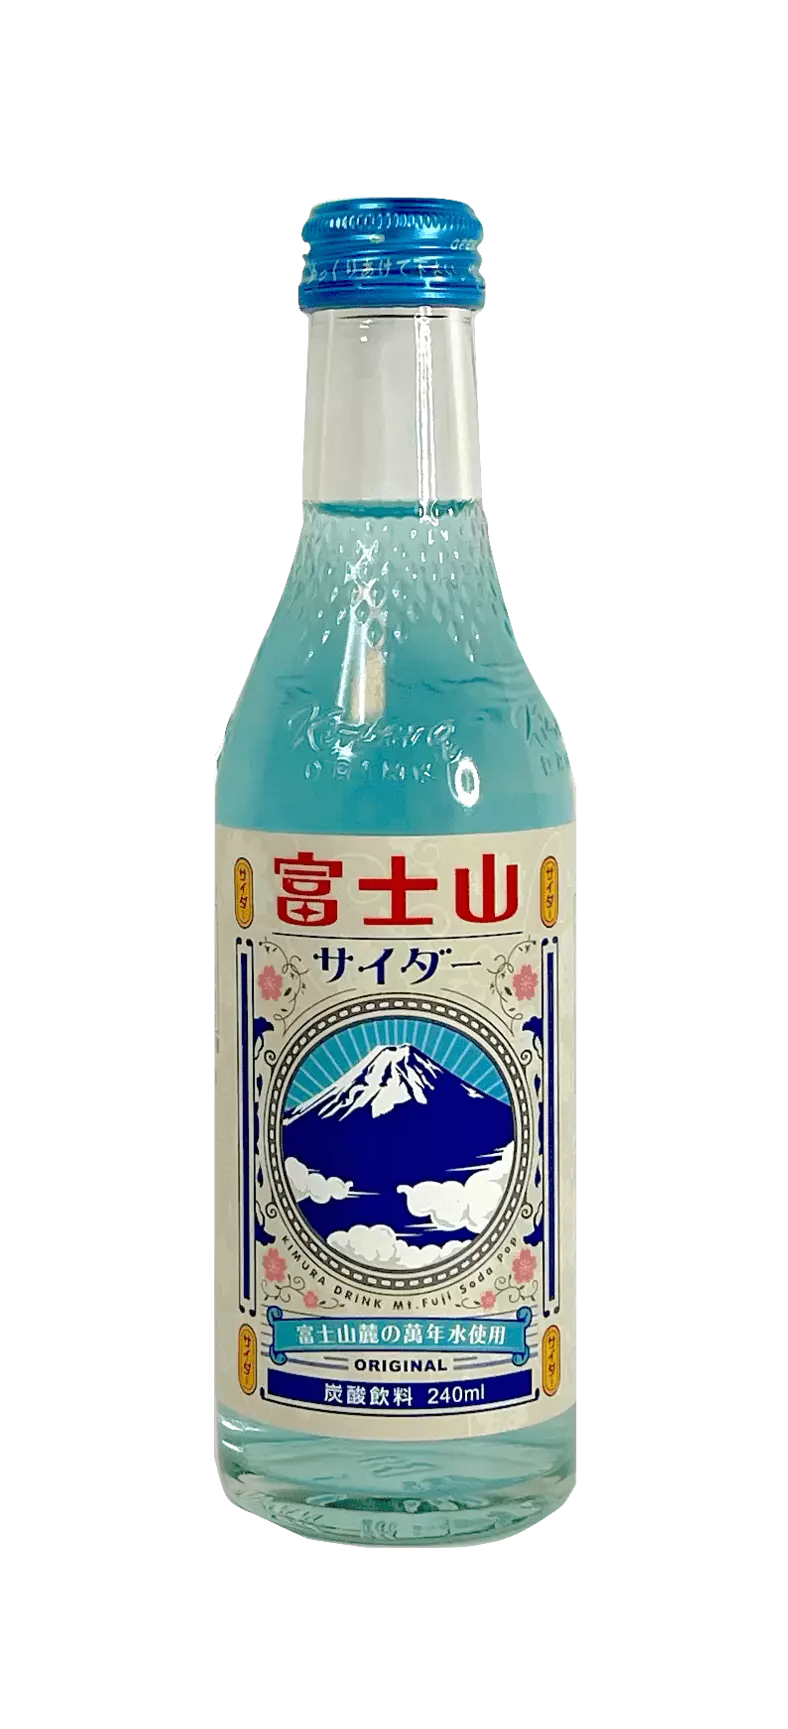 MT. Fuji Cider Original 240ml Japan